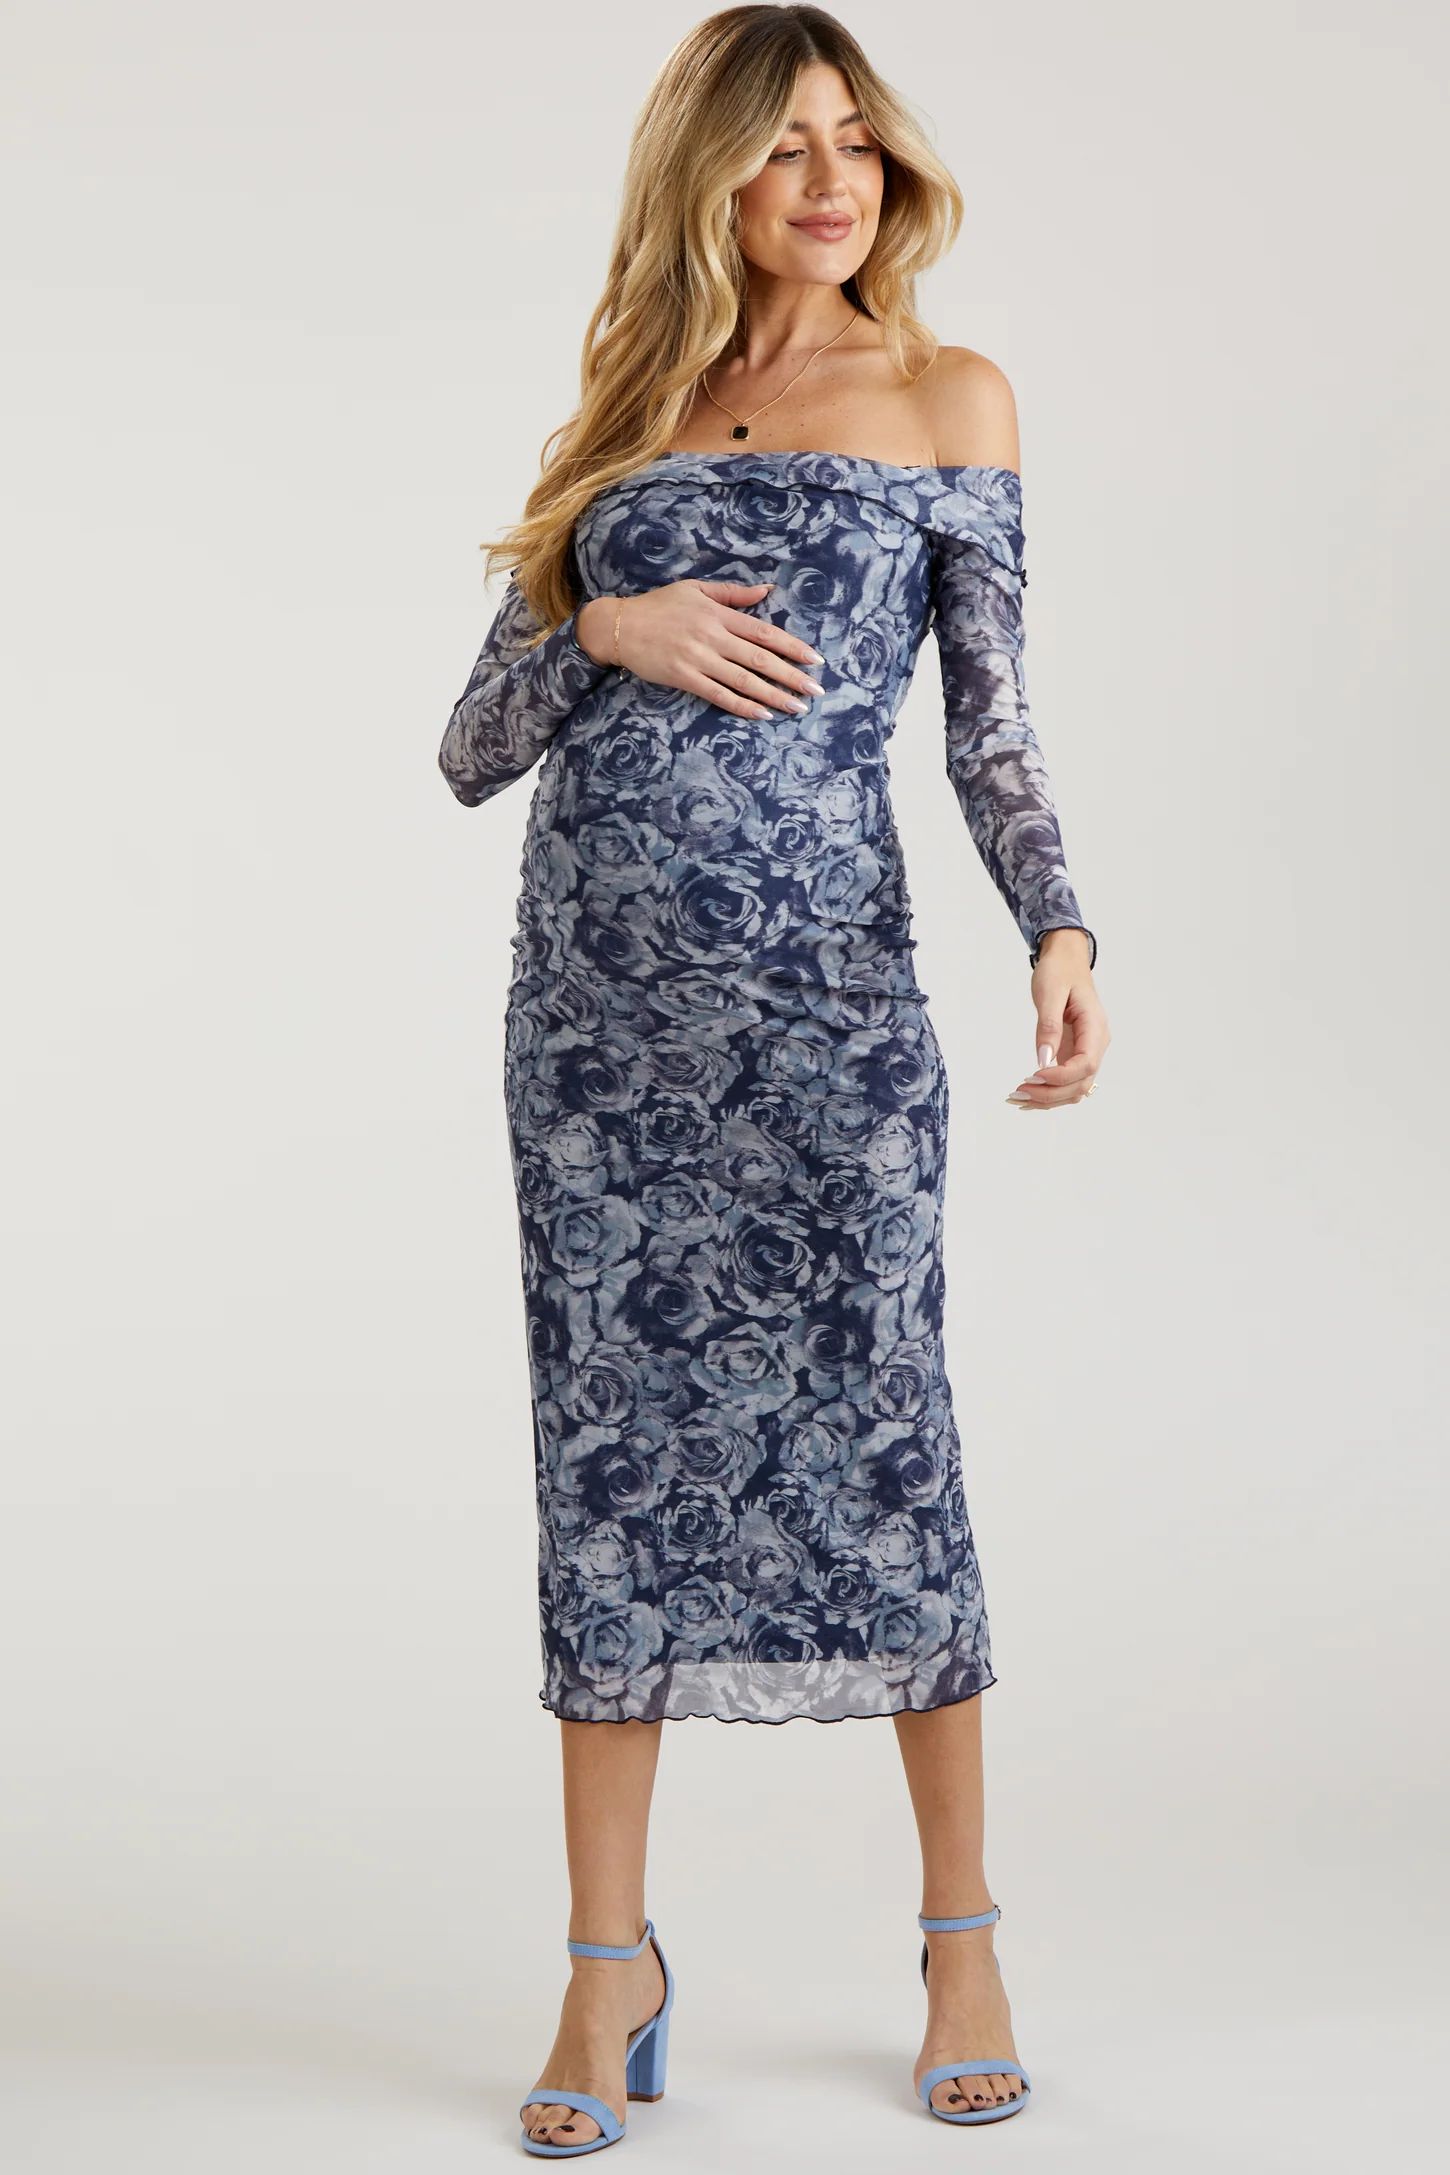 Navy Floral Off Shoulder Mesh Knit Maternity Midi Dress | PinkBlush Maternity